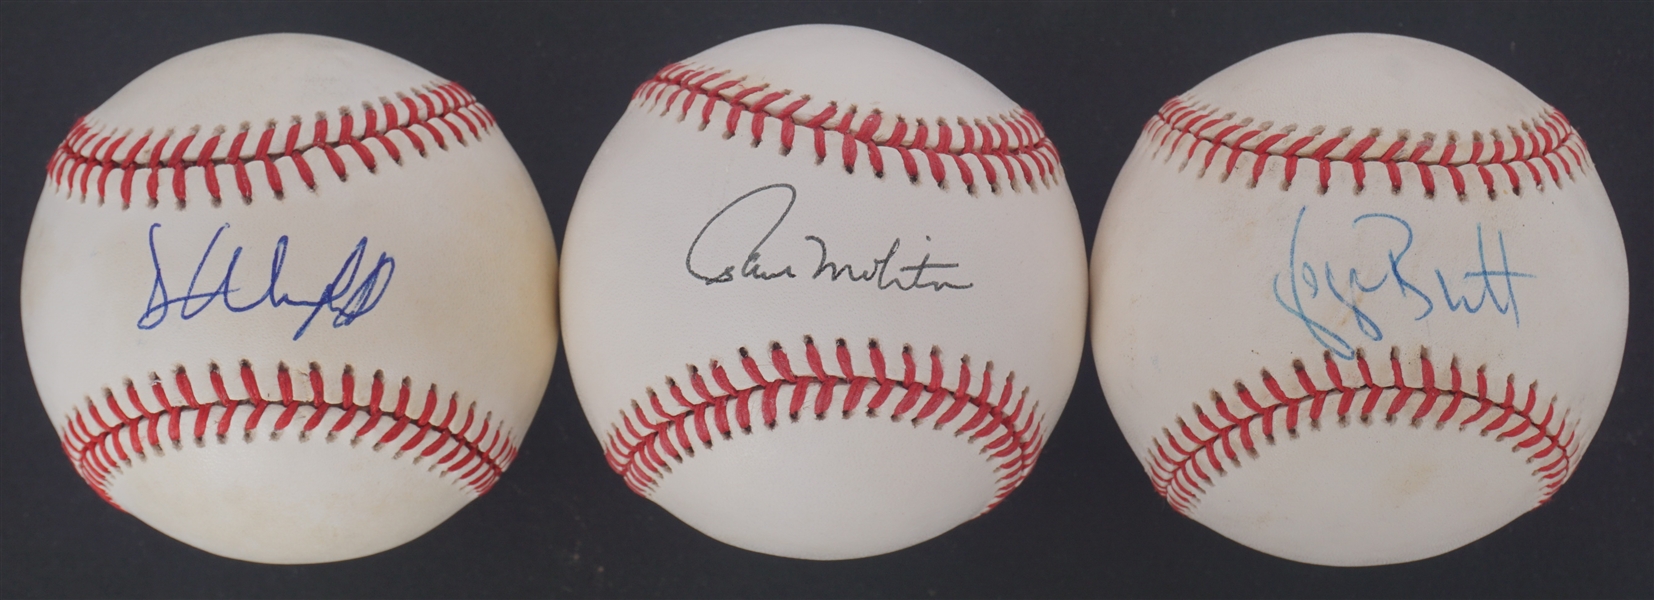 3000 Hit Club Lot of 3 Autographed Baseballs w/ Molitor, Winfield, & Brett Beckett